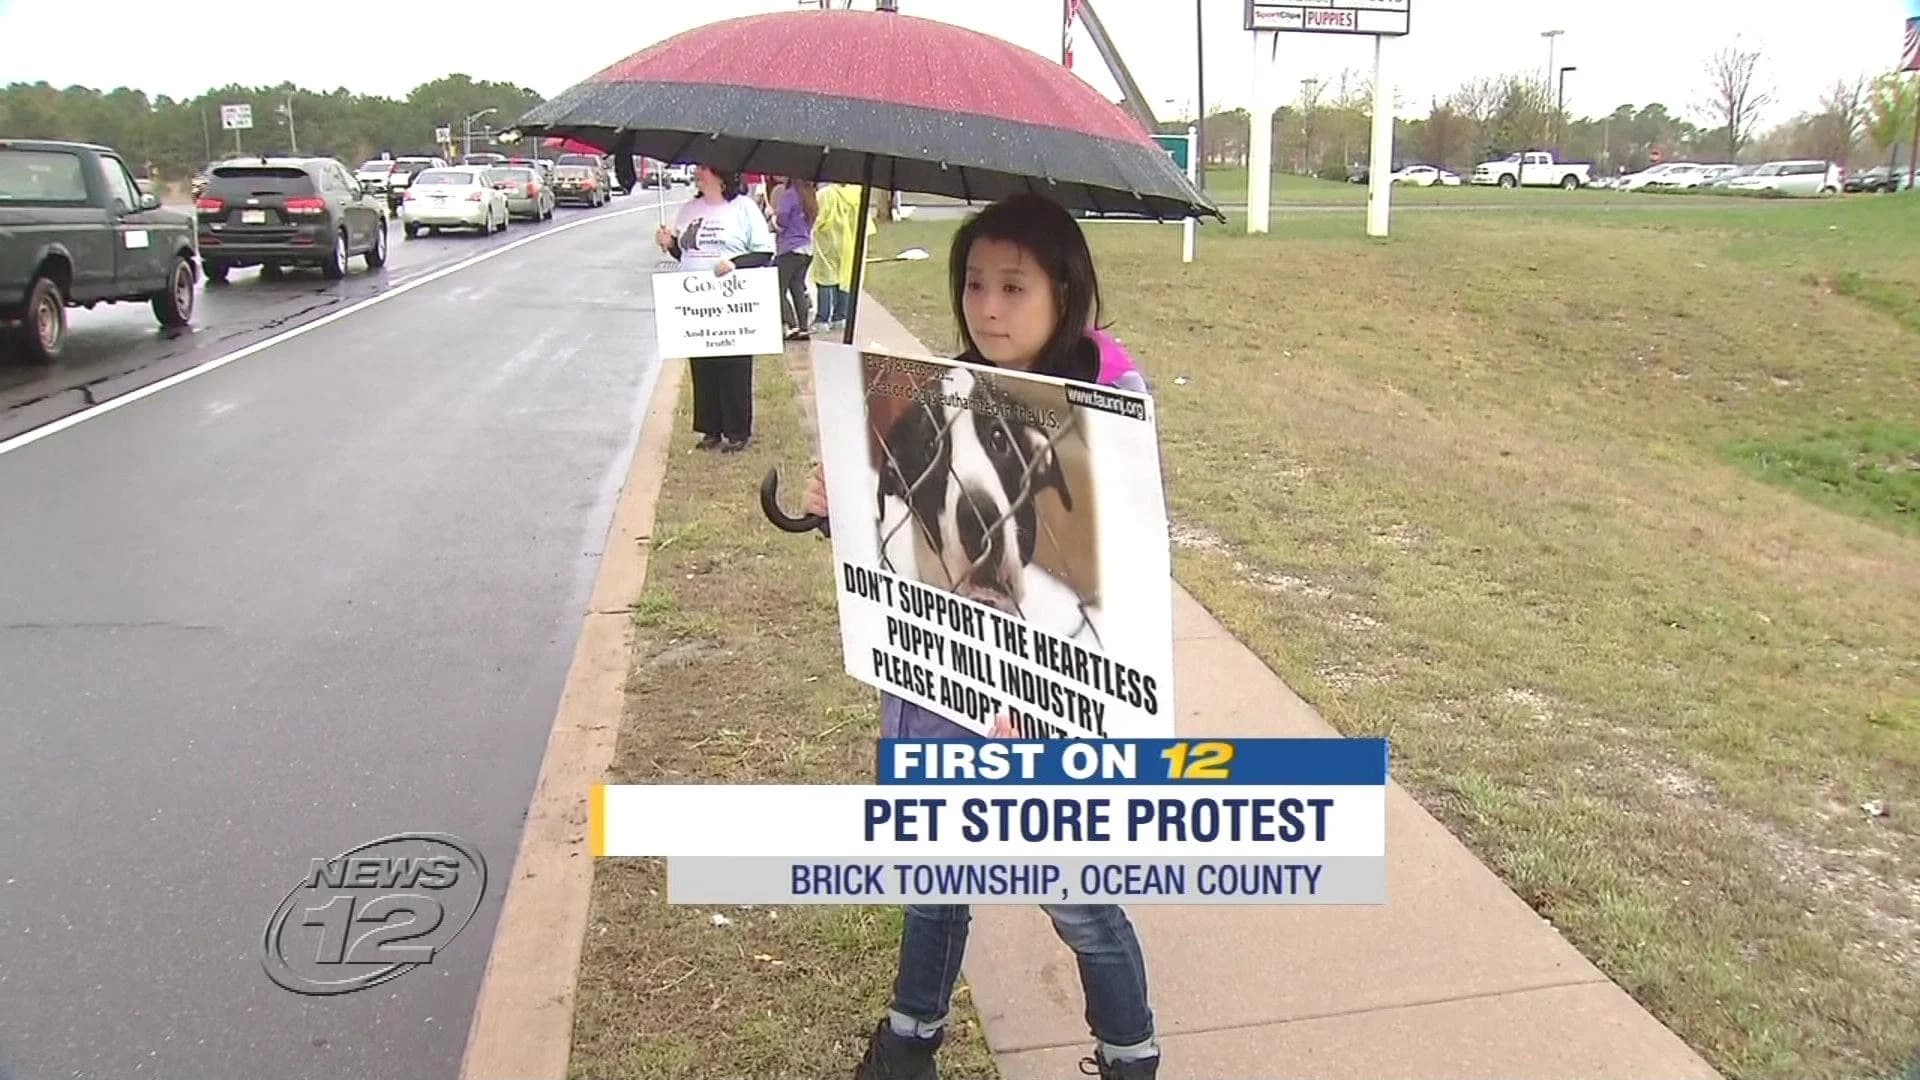 Activists protest Brick Township pet store